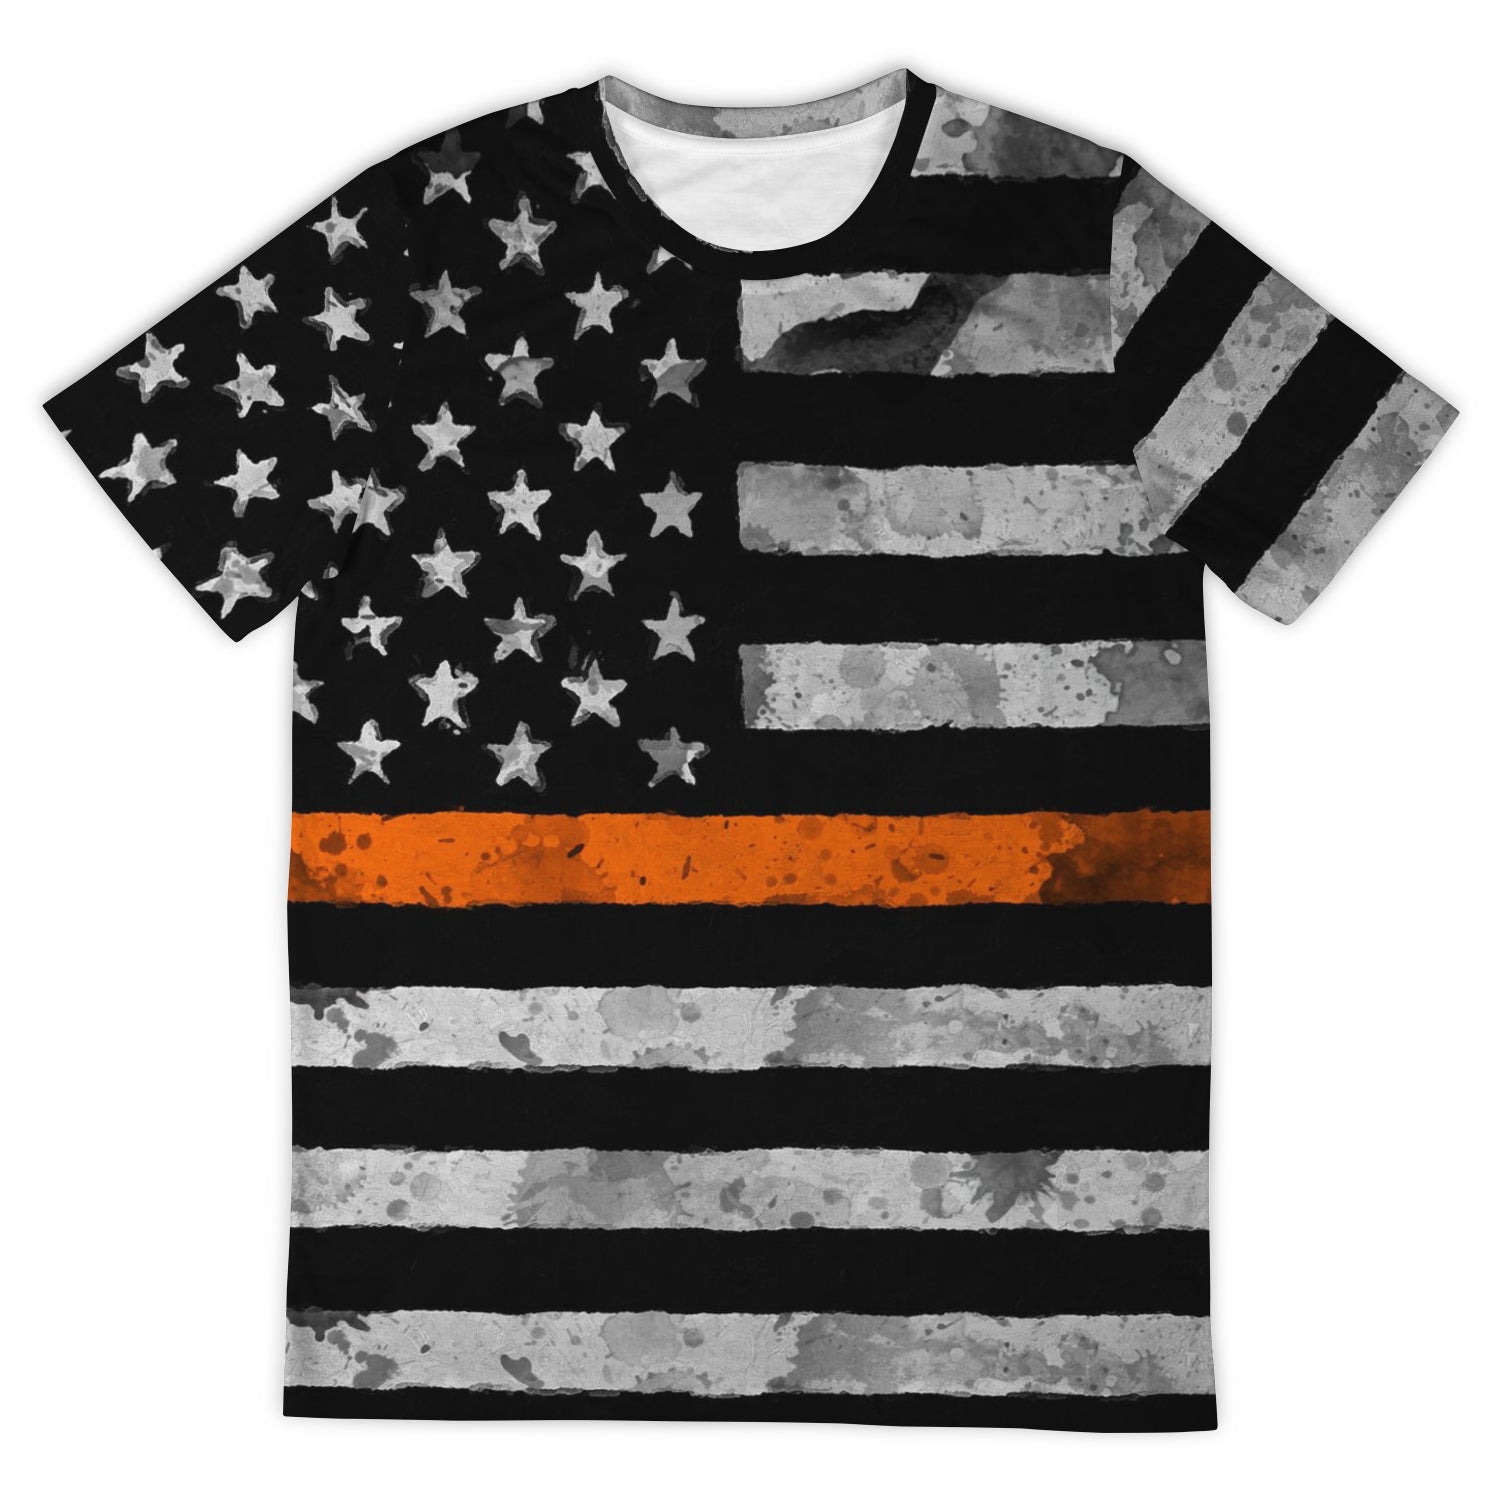 Then Orange Line All Over Print Shirt